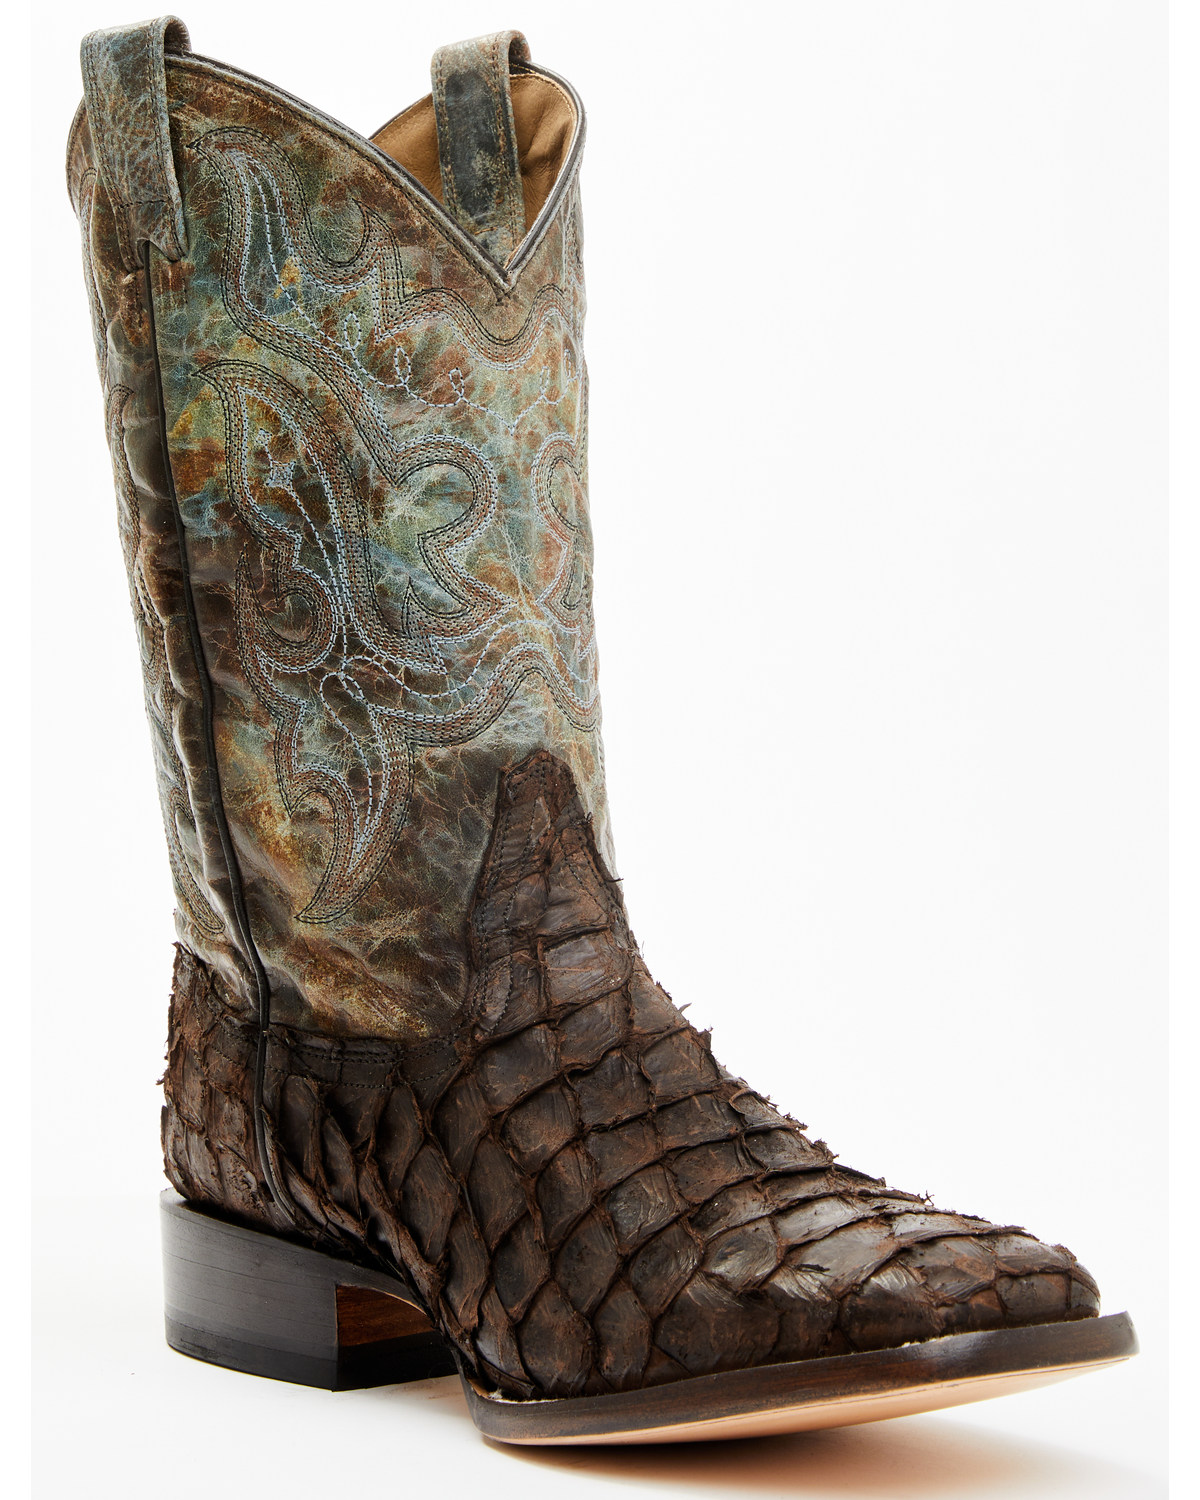 Cody James Men's Exotic Pirarucu Ocean Western Boots - Broad Square Toe